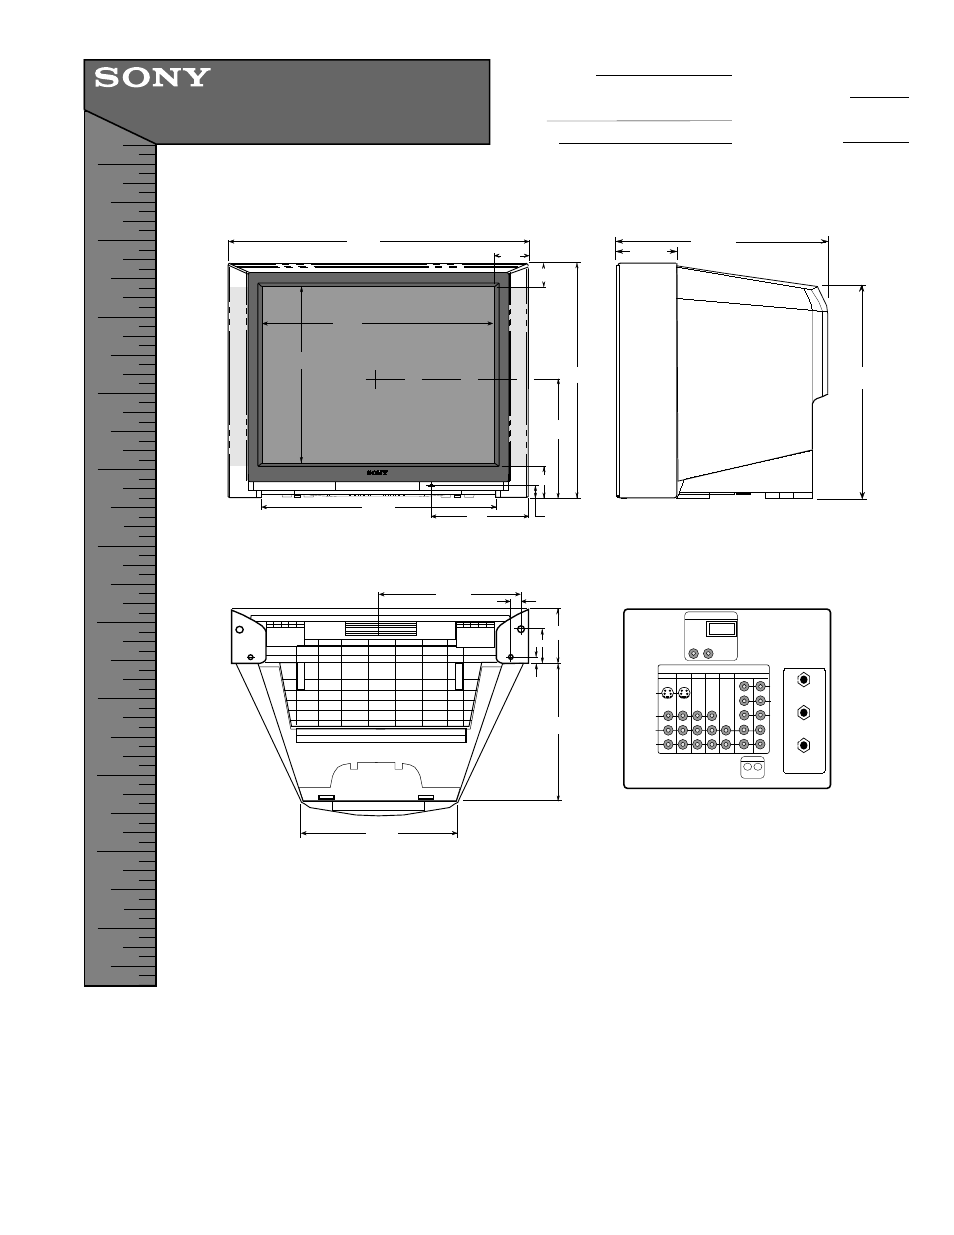 Sony KV-40XBR800 User Manual | 1 page